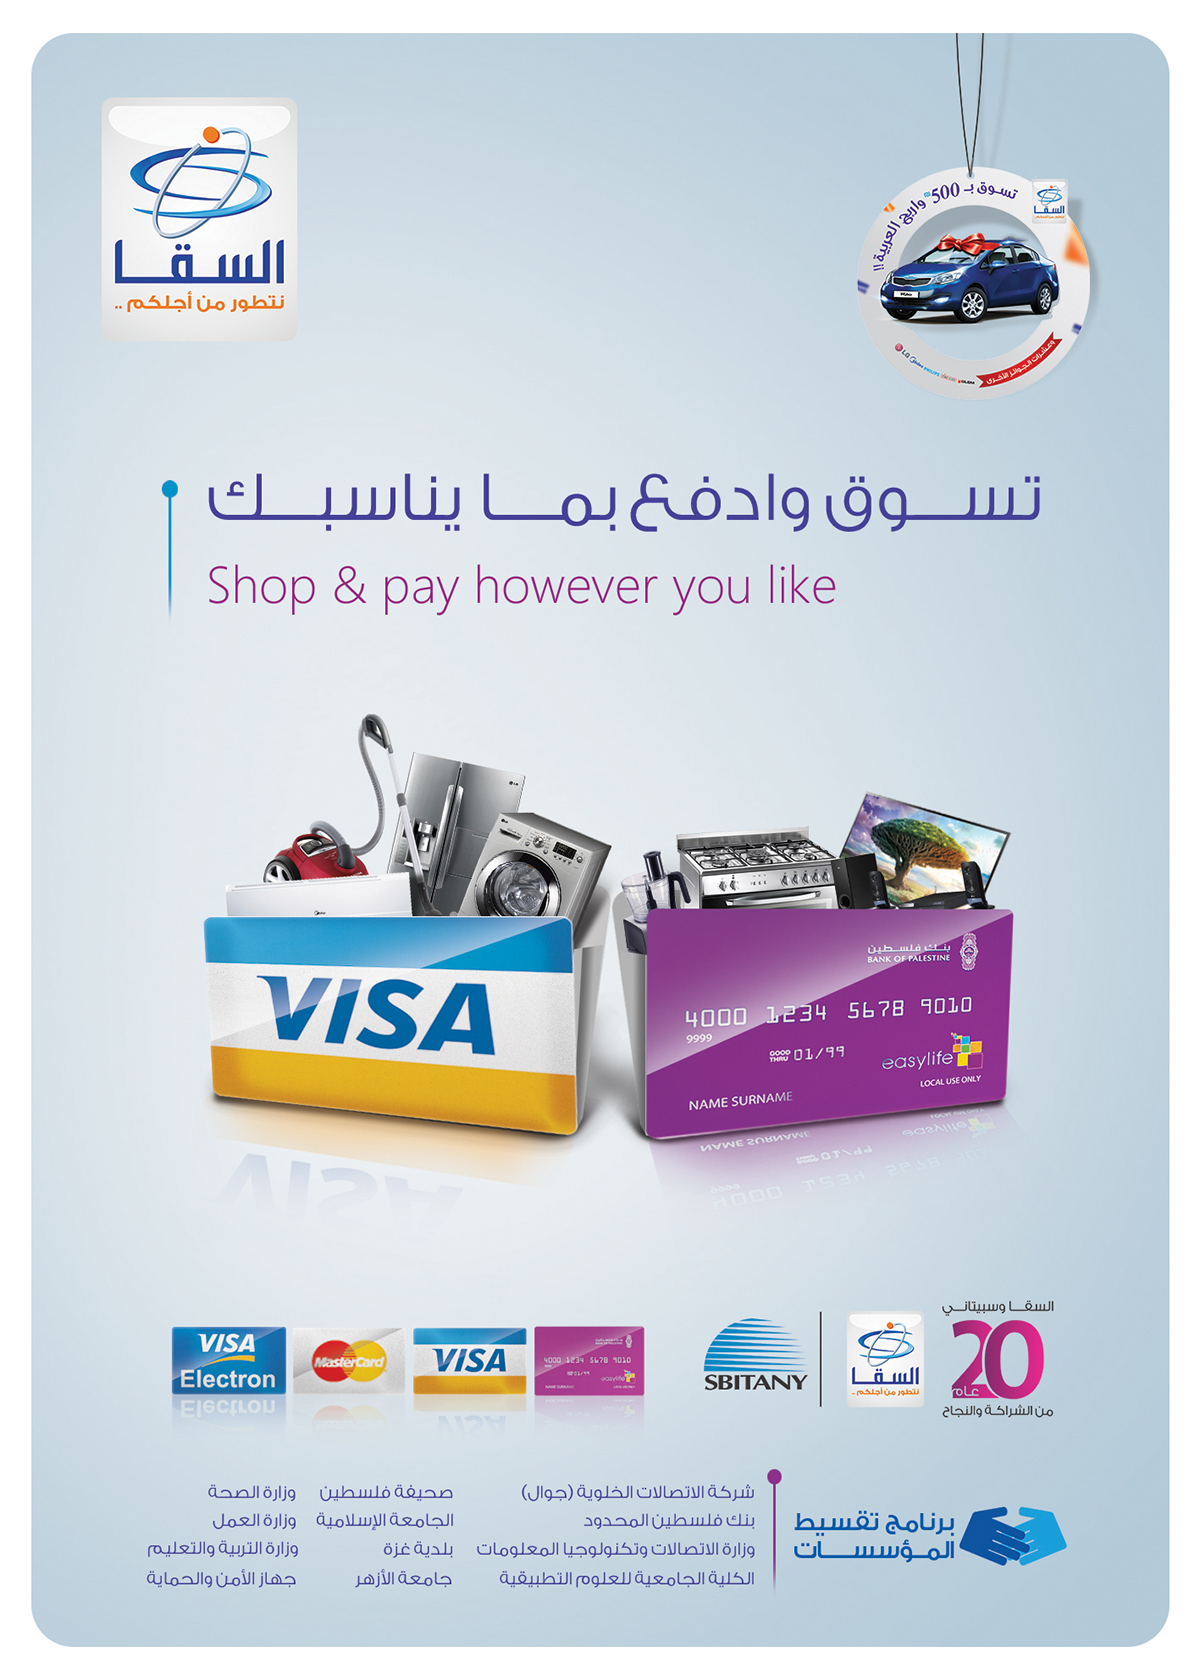 shop Pay car Visa card visacard Bank palestine ِalsaqqa home appliances design creative